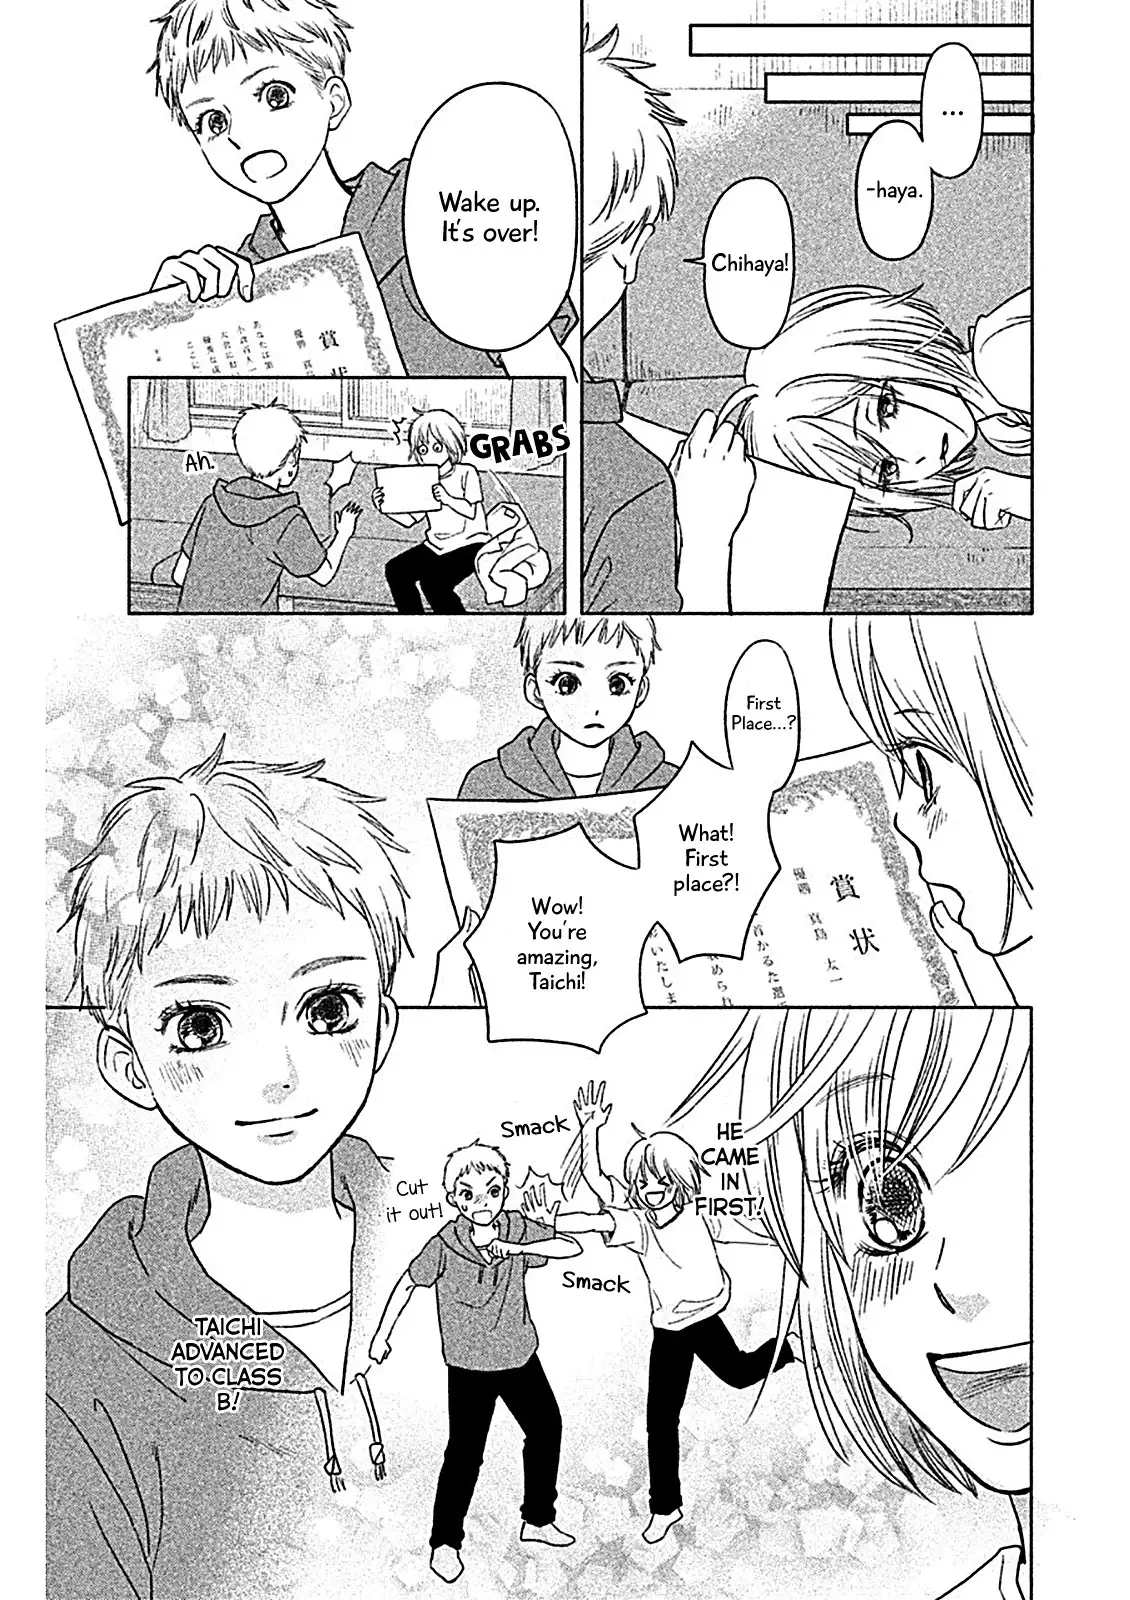 Chihayafuru: Middle School Arc - 1 page 30